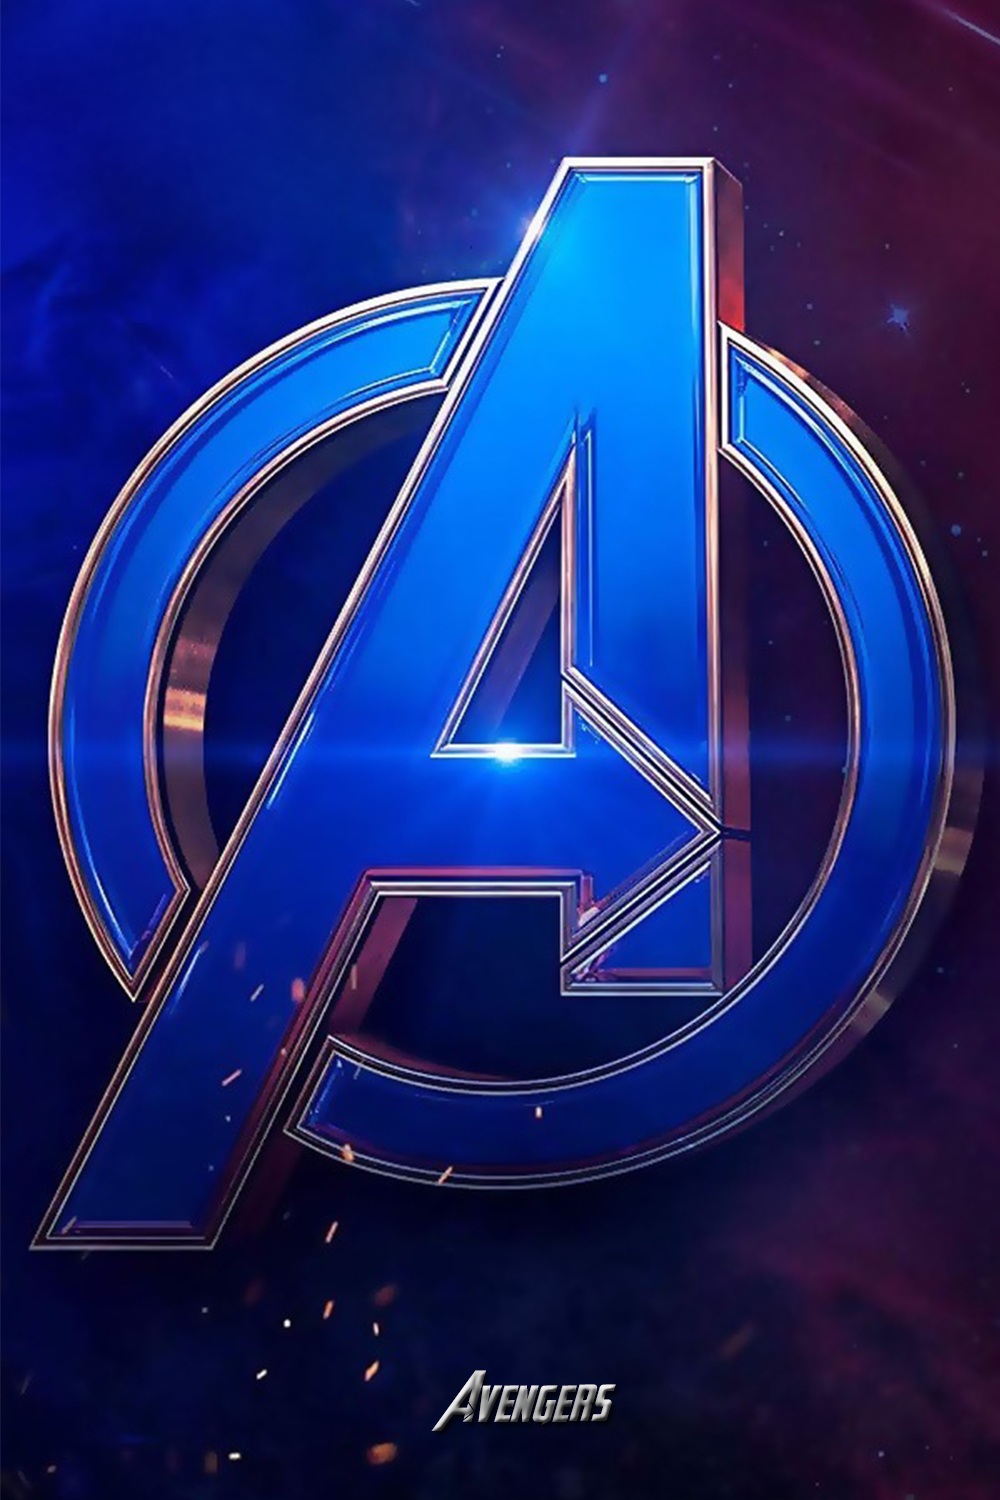 Avengers Wallpaper for Mobile HD Free Download. Avengers